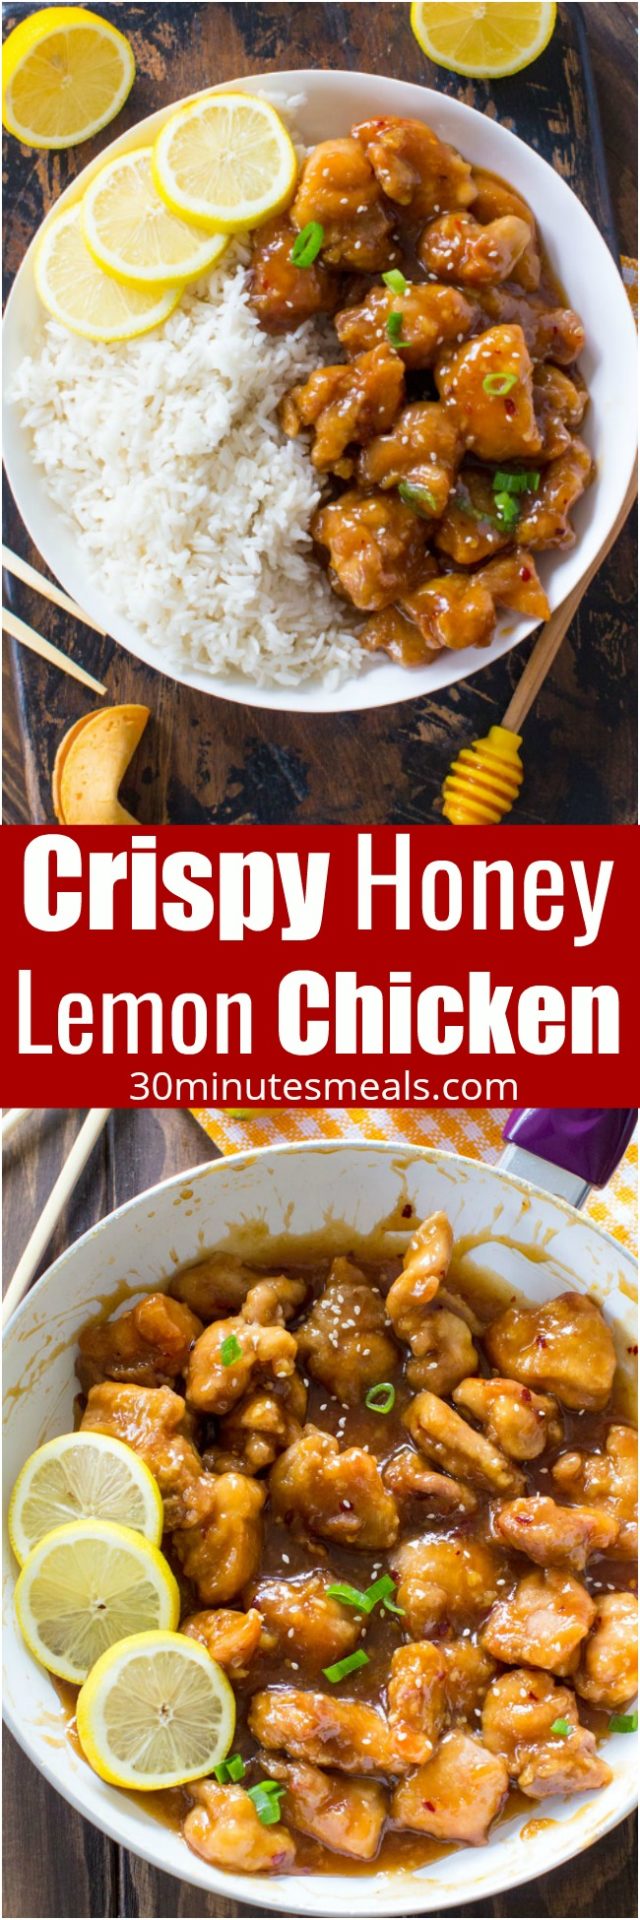 Crispy Honey Lemon Chicken - 30 minutes meals